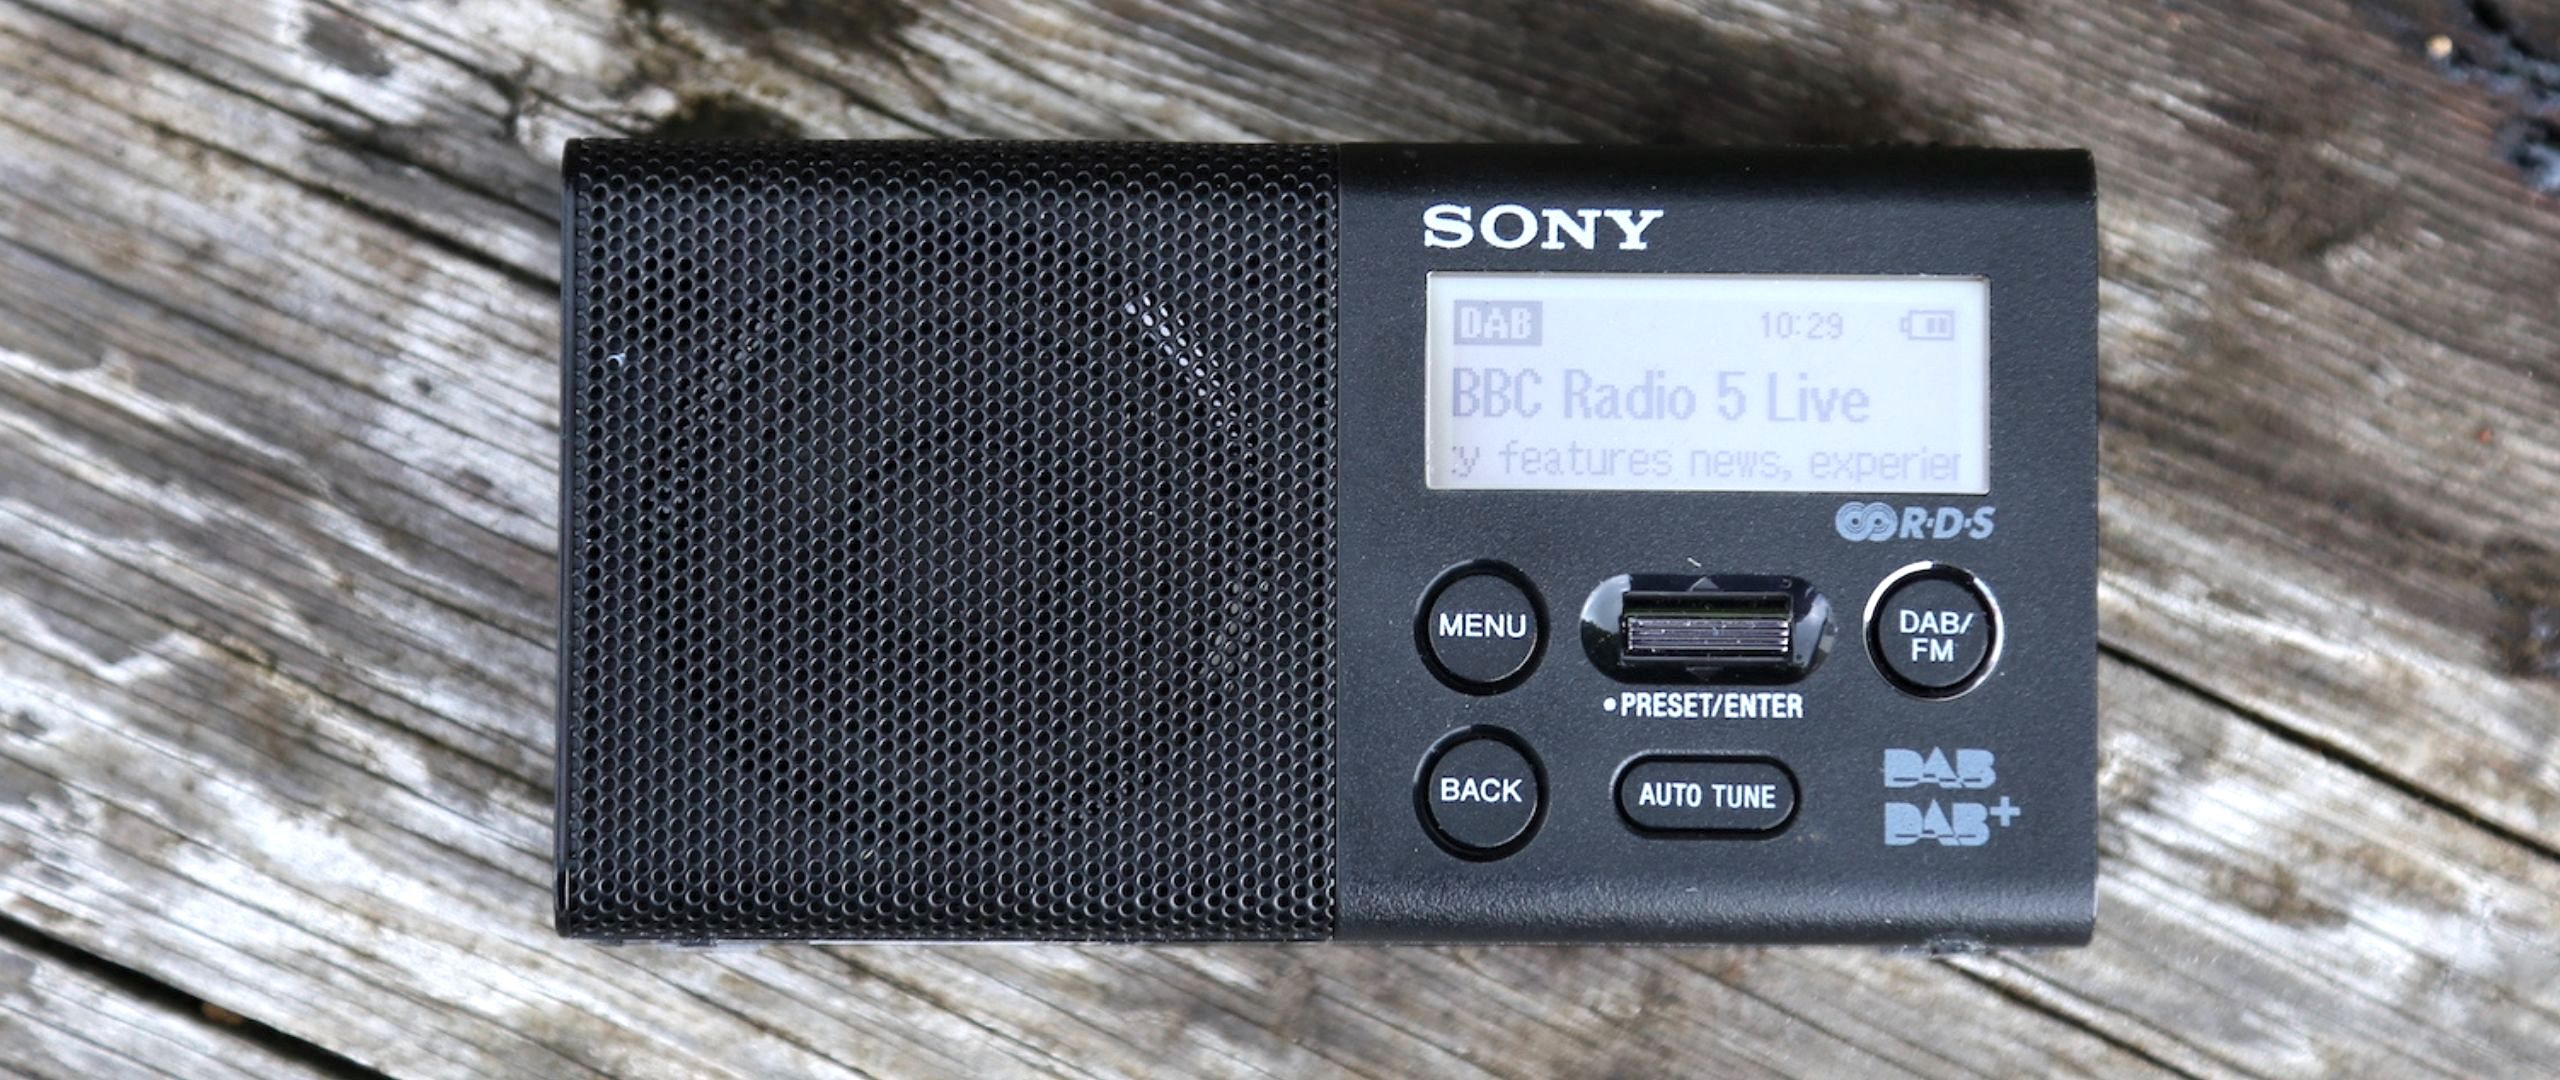 Sony XDR-P1 DAB radio review